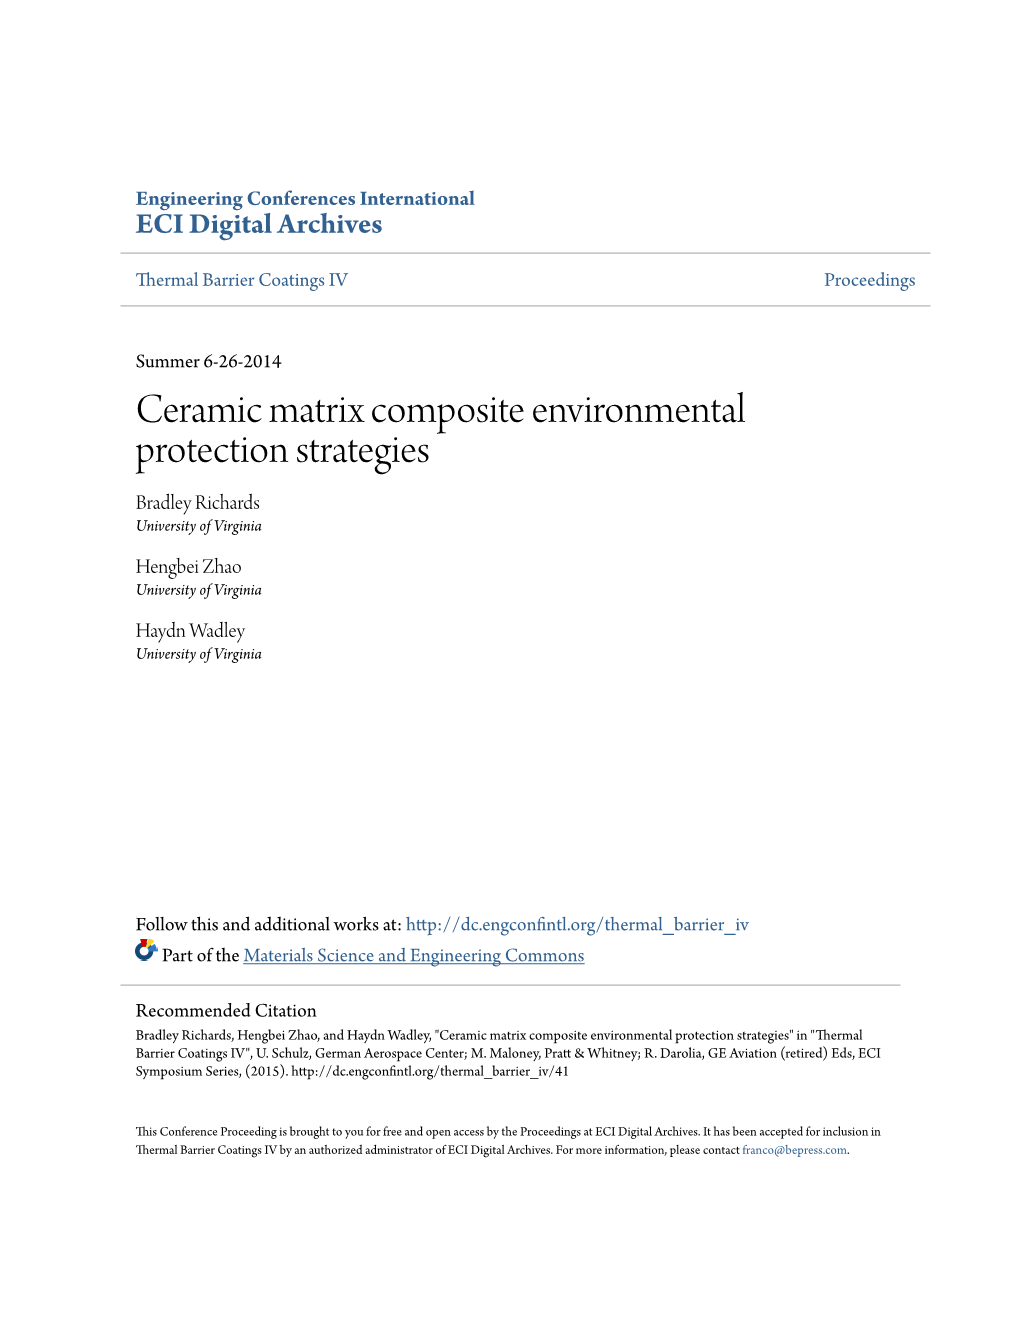 Ceramic Matrix Composite Environmental Protection Strategies Bradley Richards University of Virginia